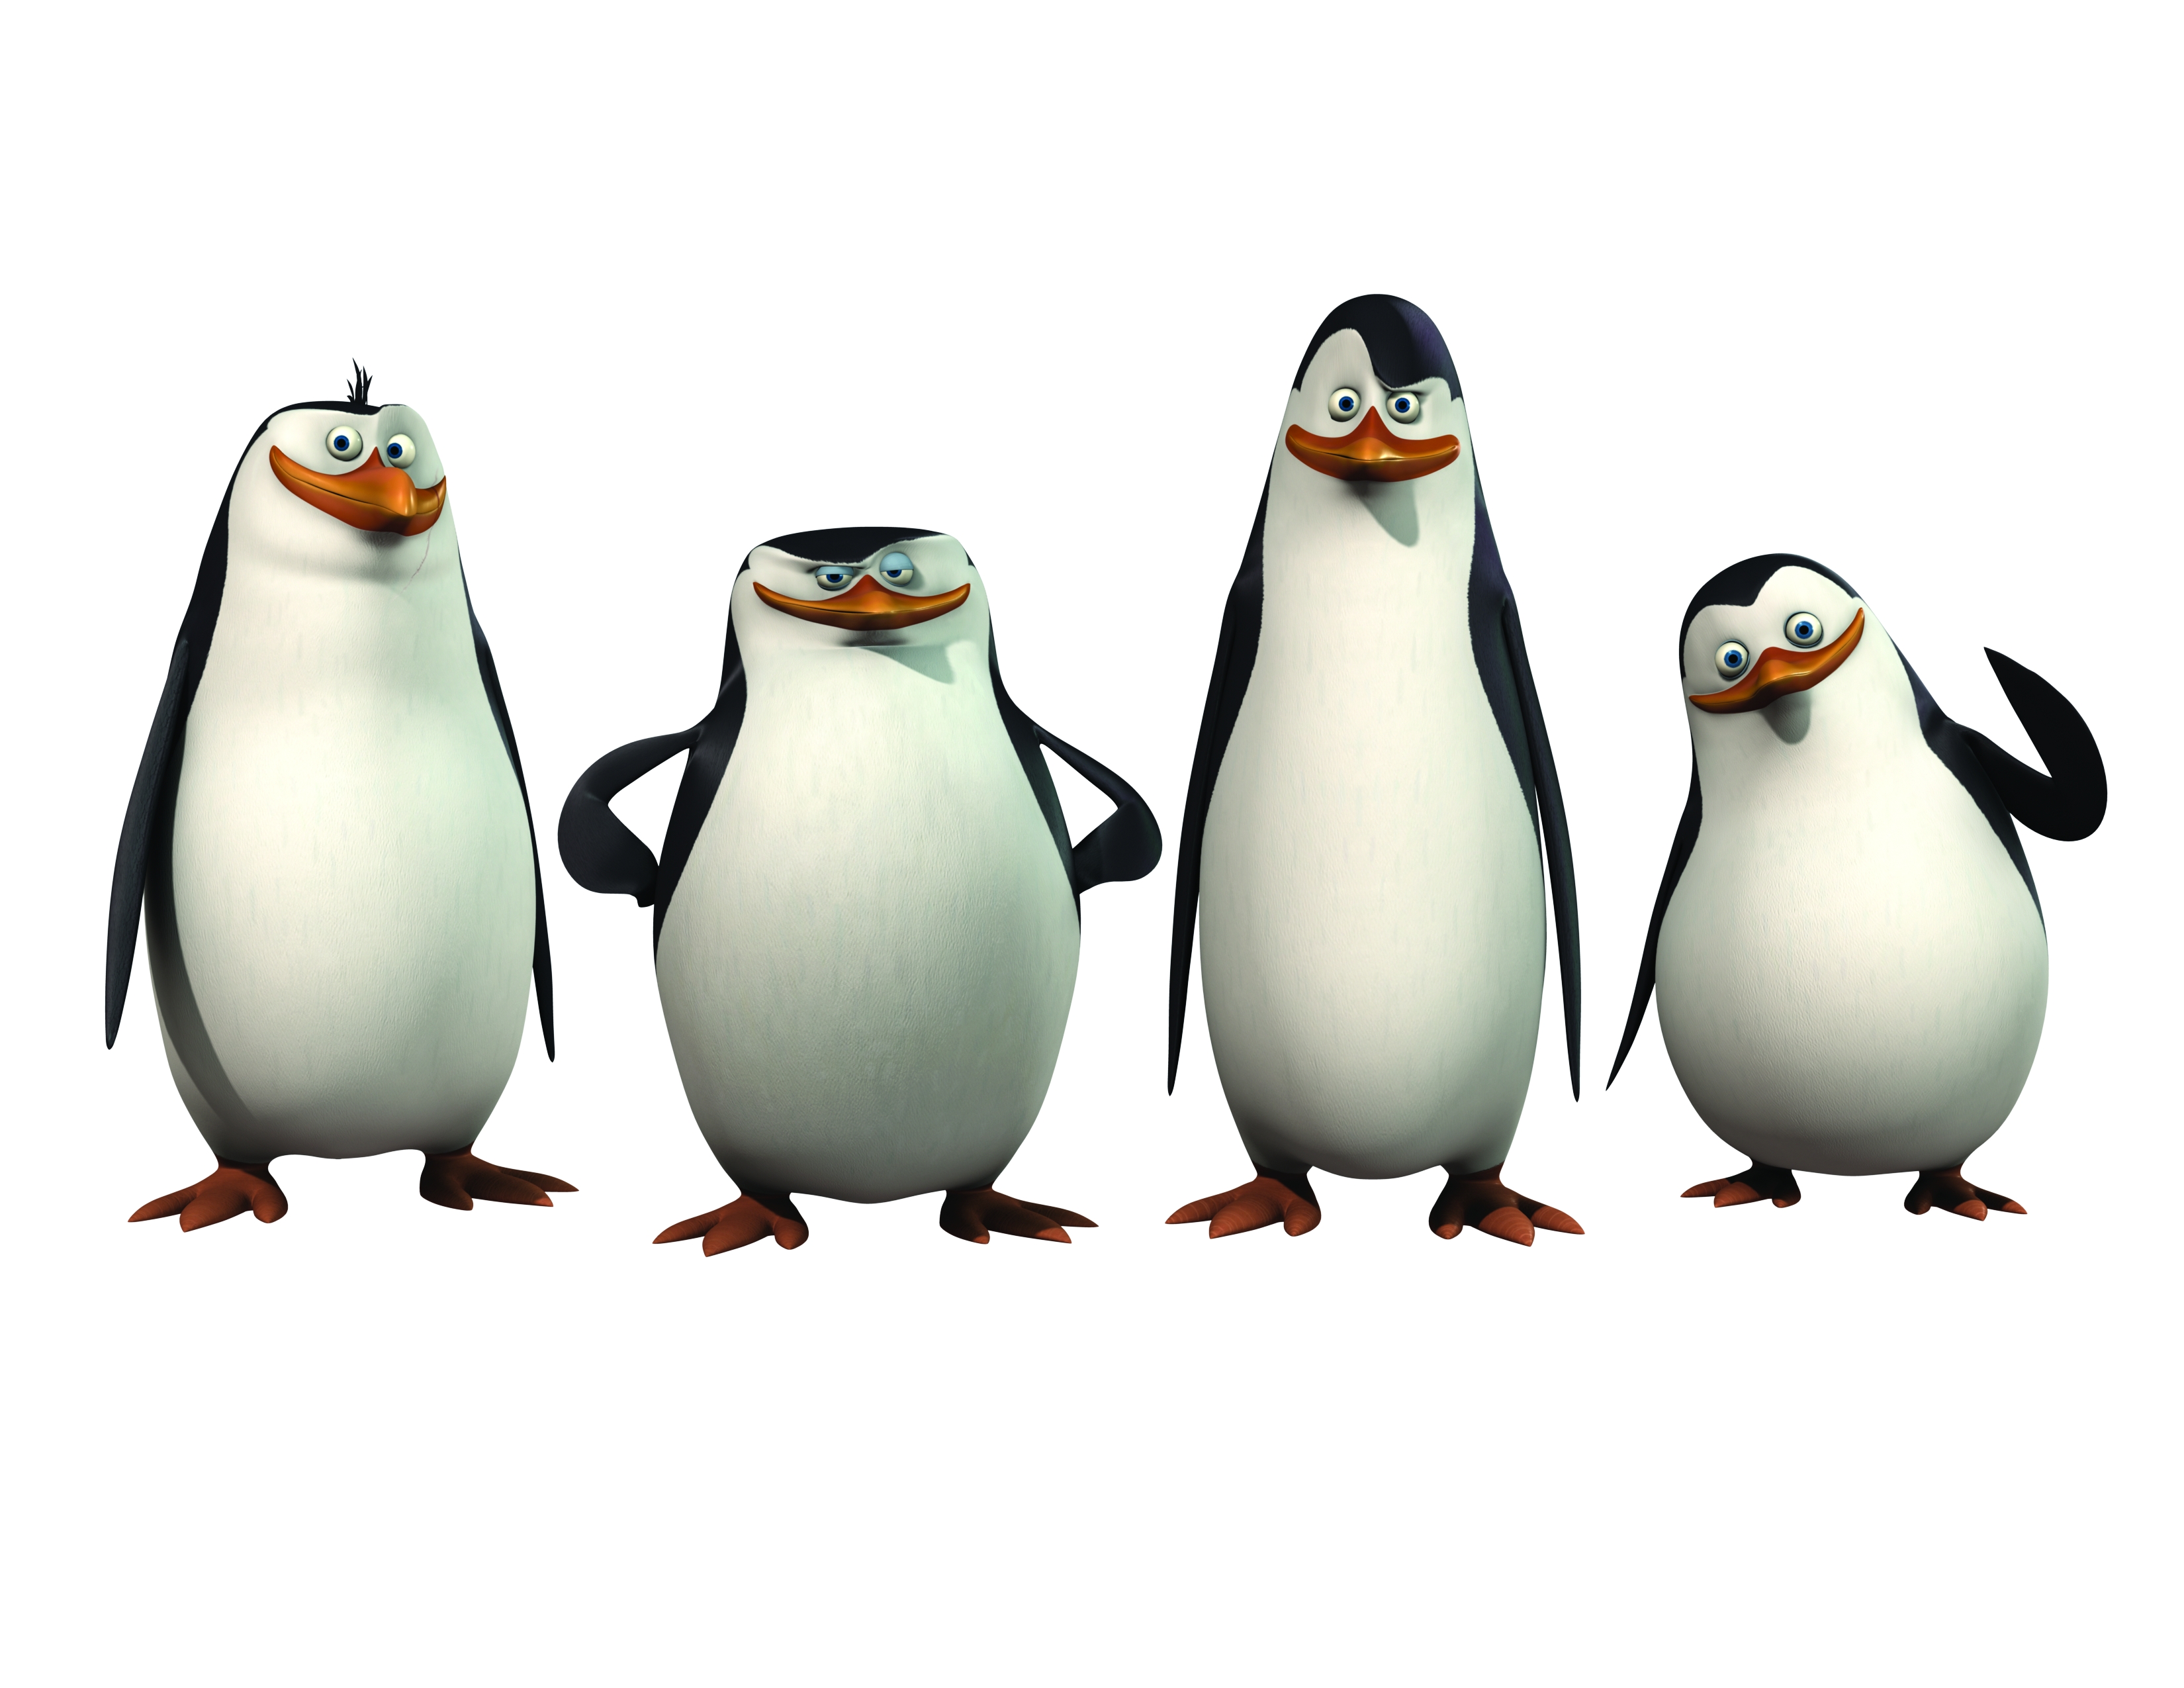  Box-Office: Pinguins no topo